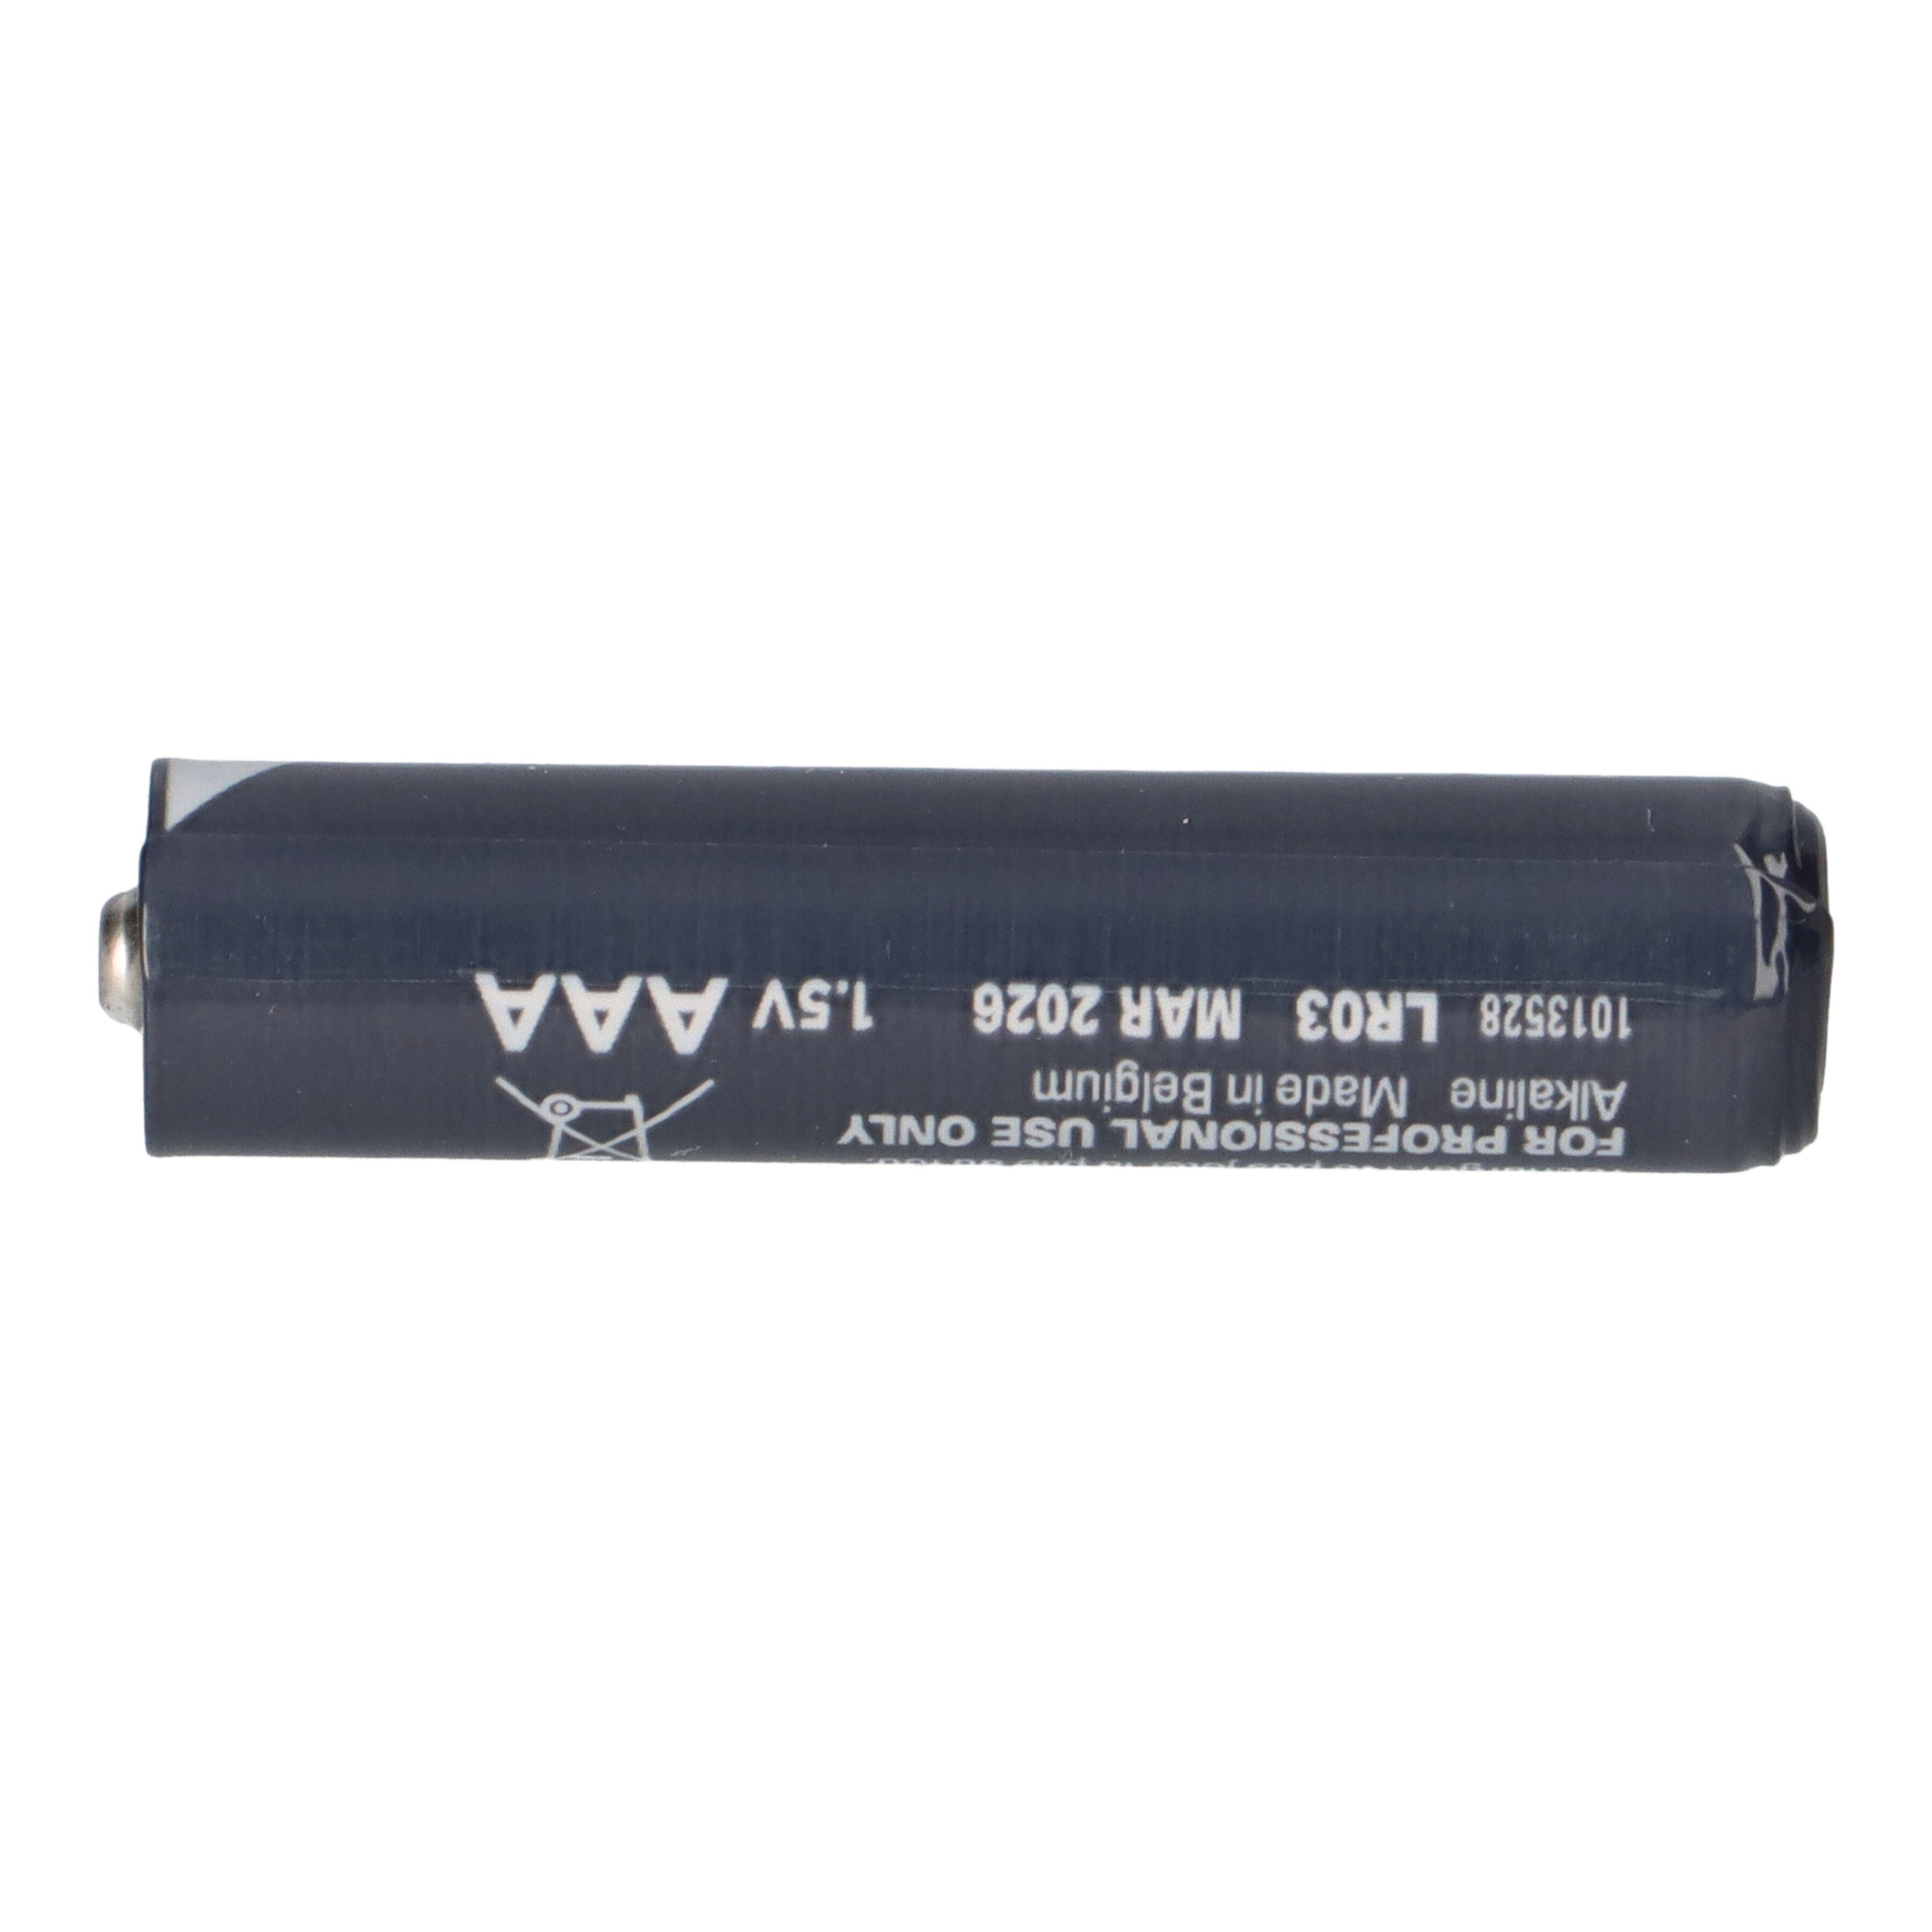 Batterie Micro Batterie Procell Duracell 500x Duracell MN2400